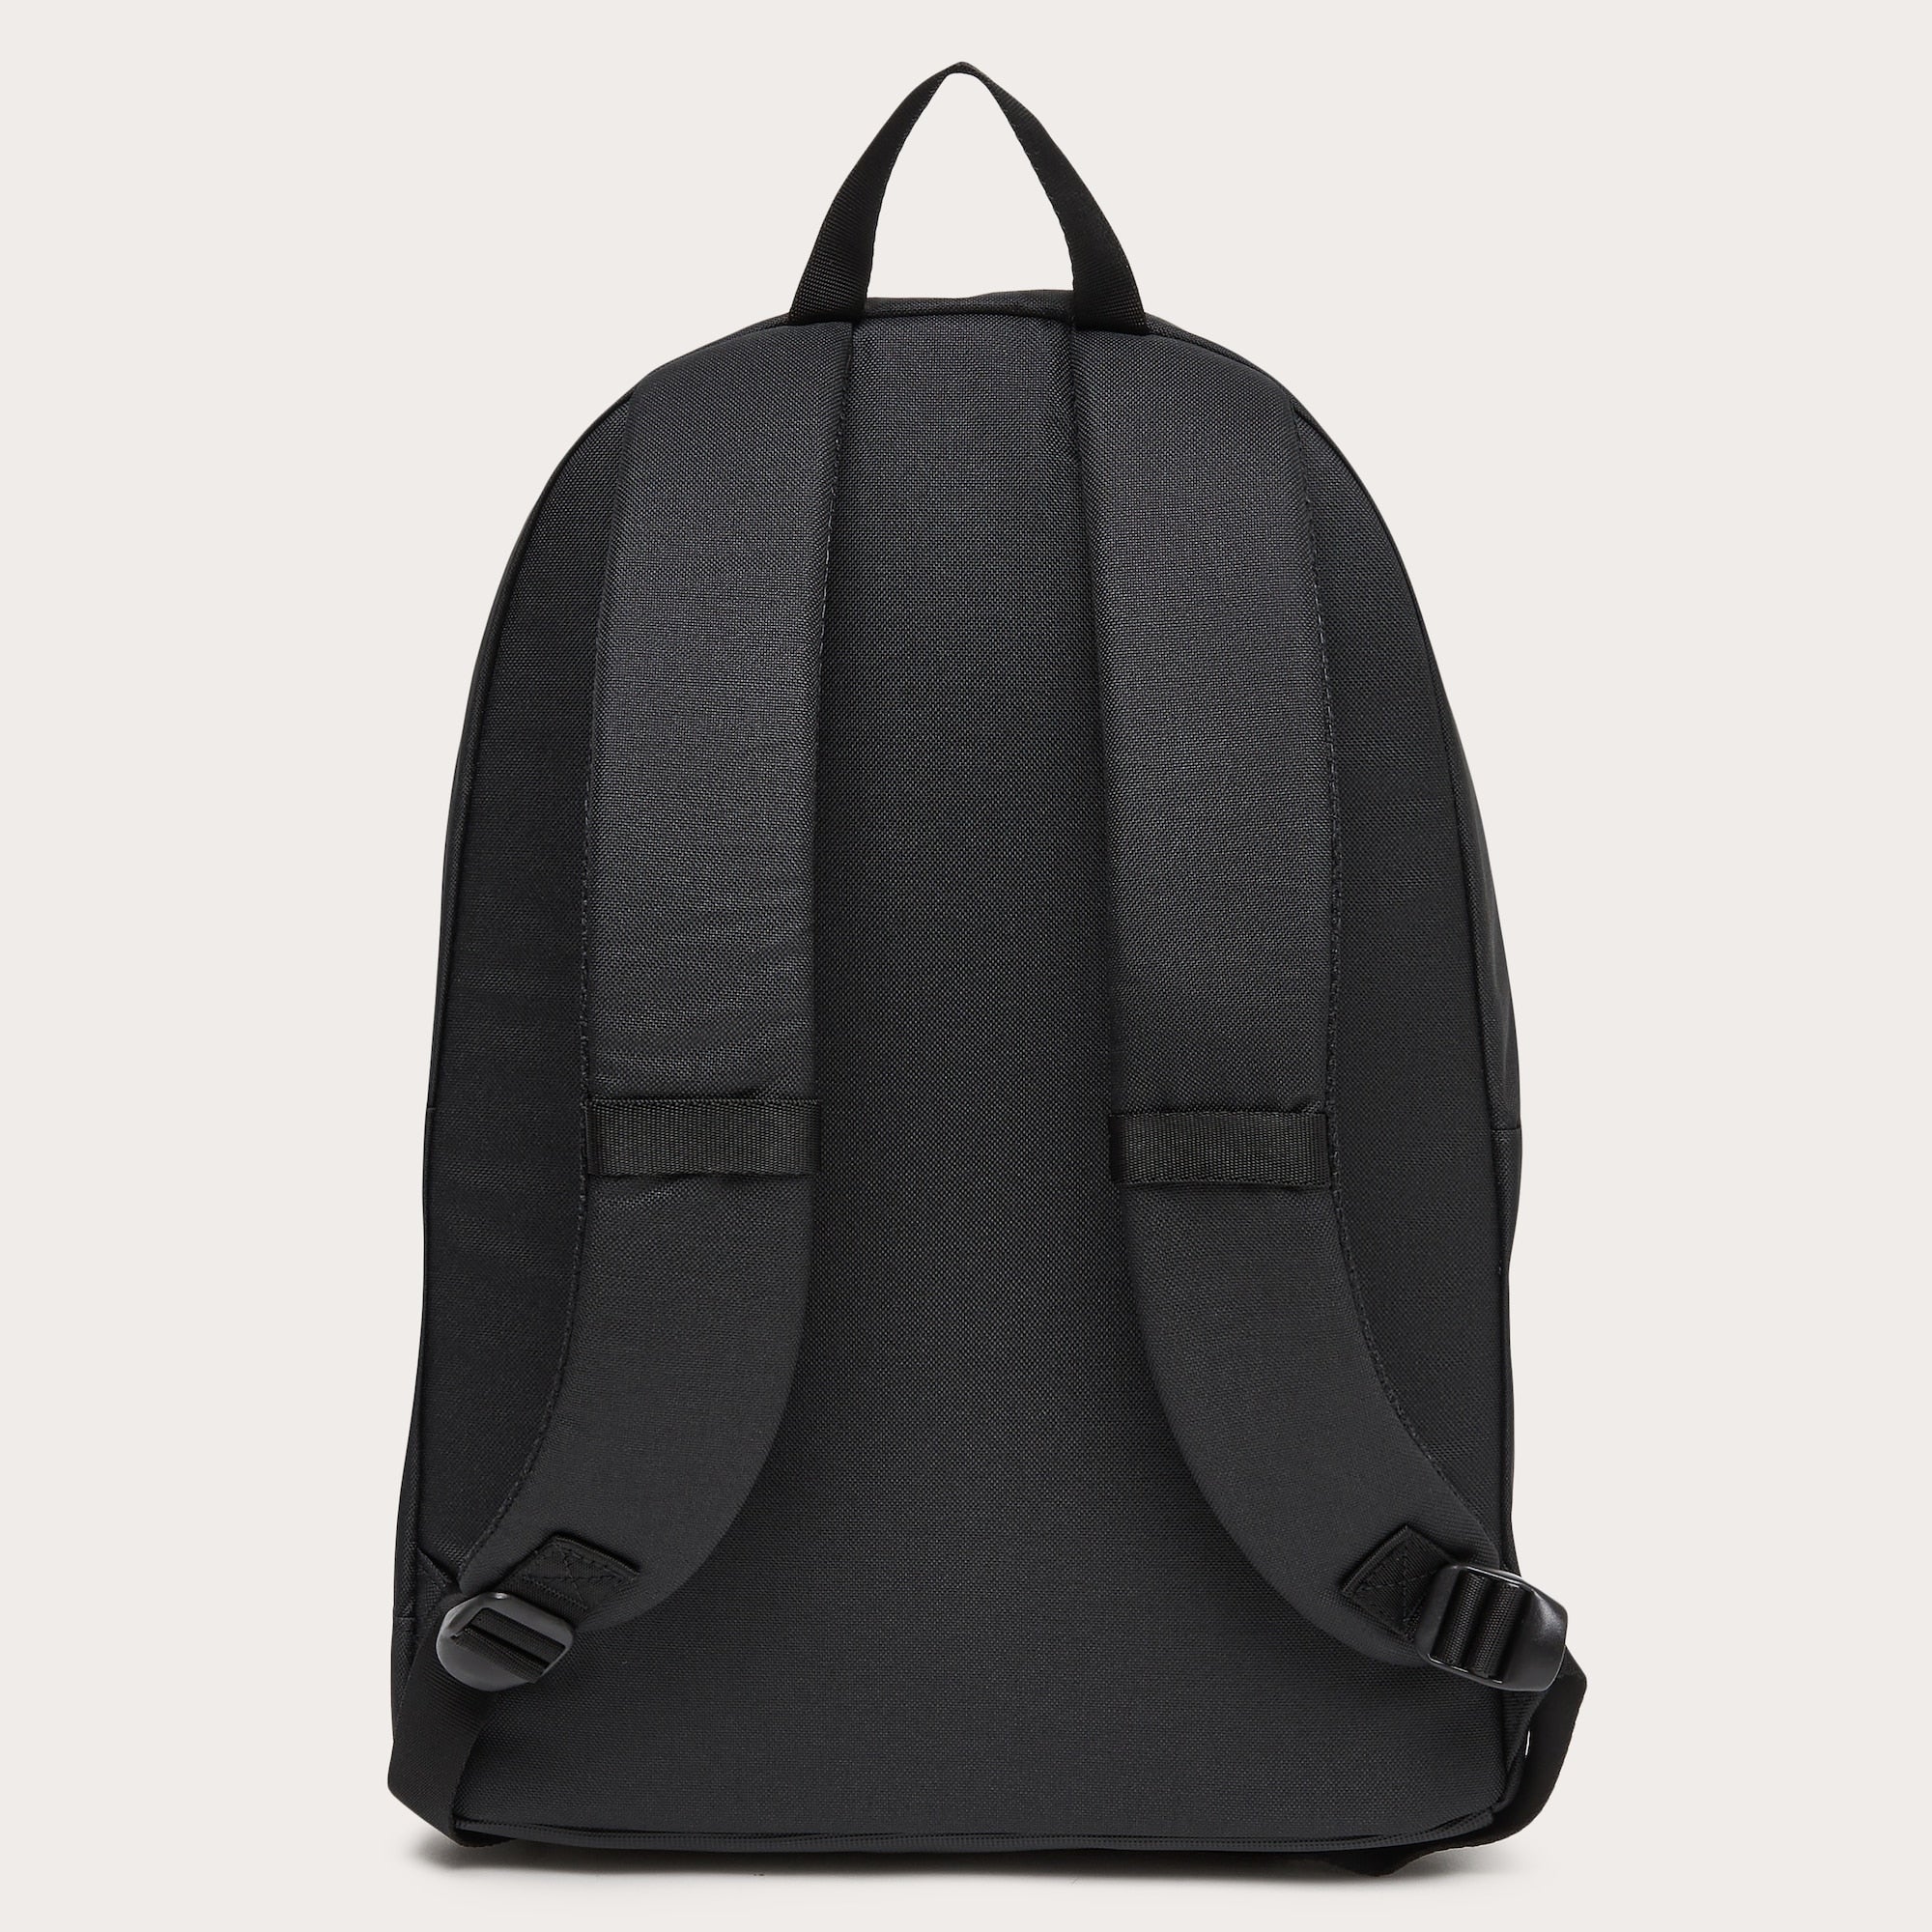 Oakley TRANSIT Everyday Backpack